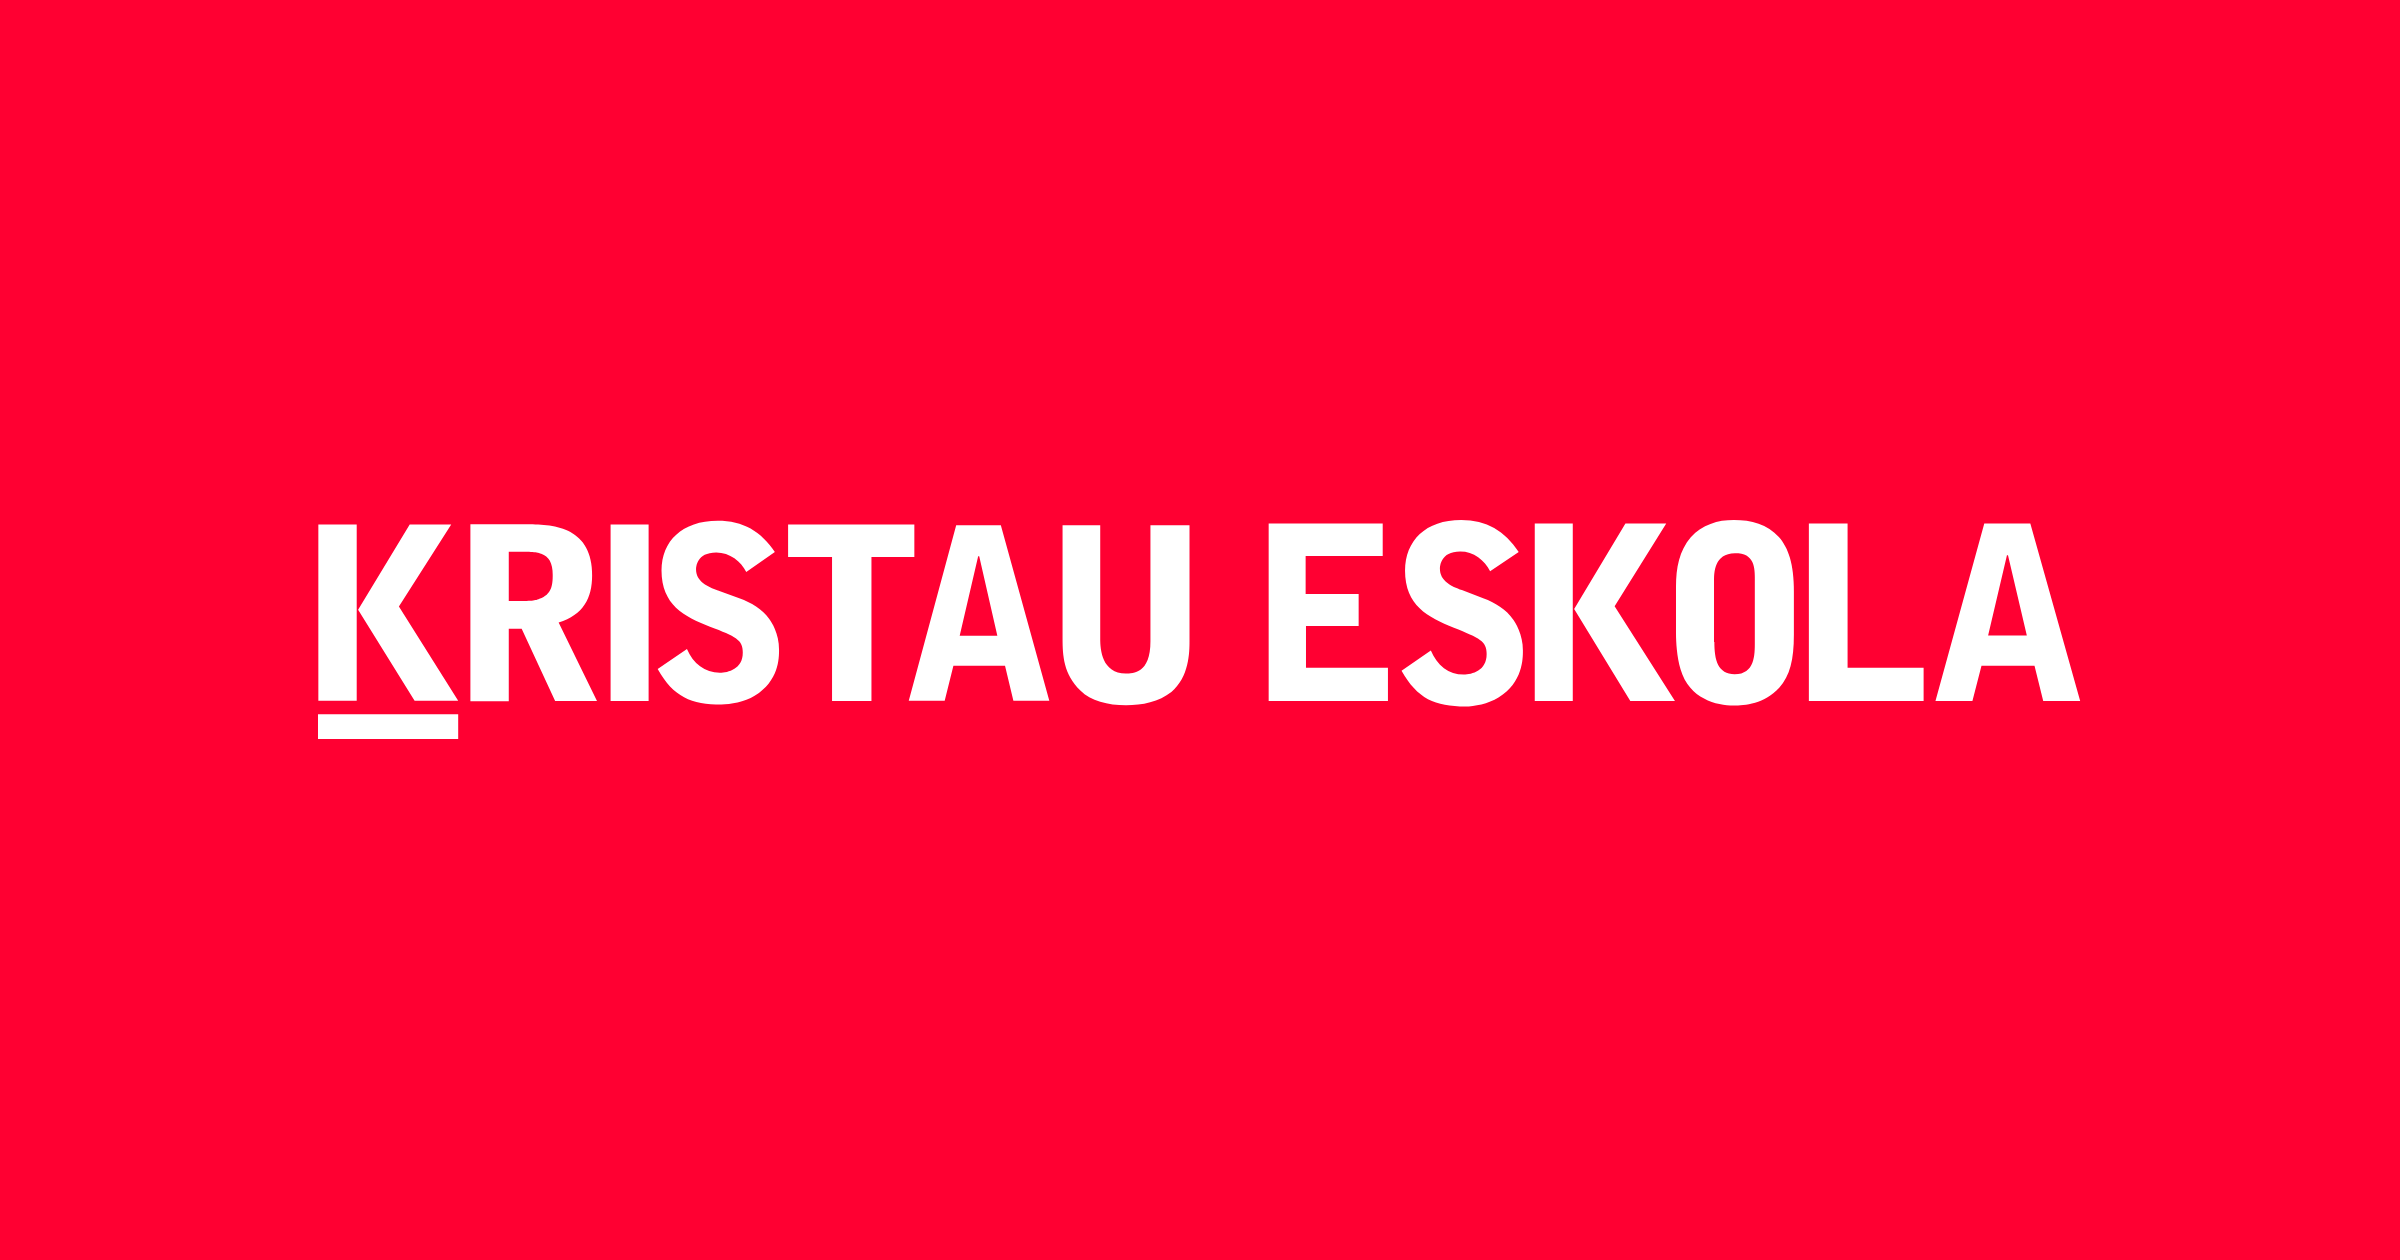 Kristau Eskola  Association of catholic schools